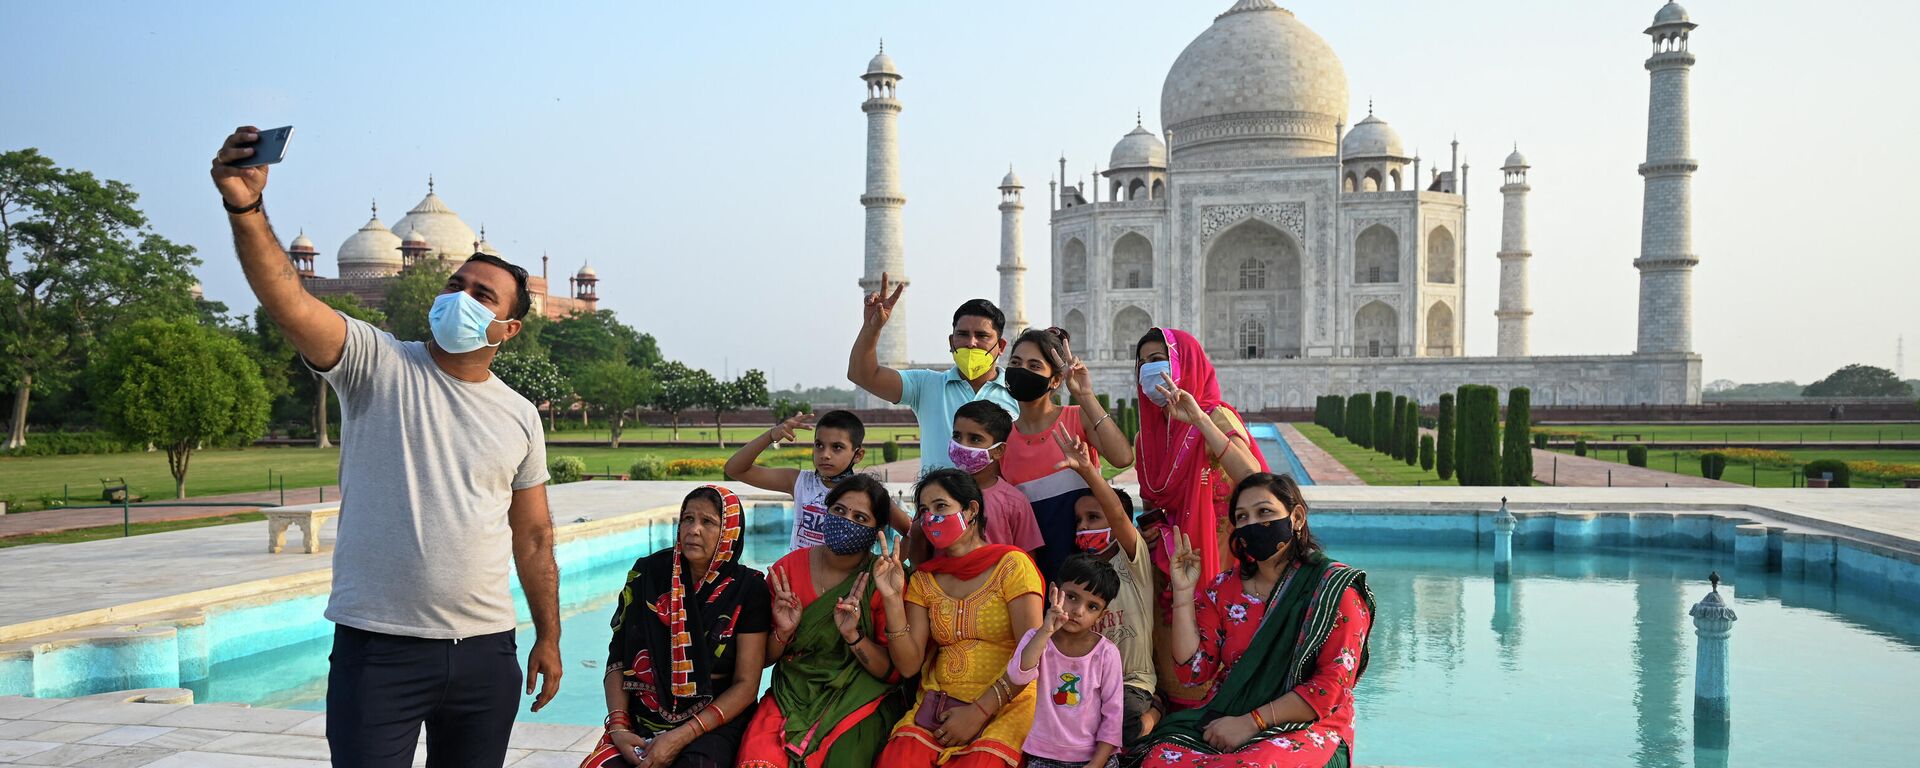 Un grupo de turistas toma fotos cerca del Taj Mahal, ciudad de Agra, India  - Sputnik Mundo, 1920, 07.10.2021